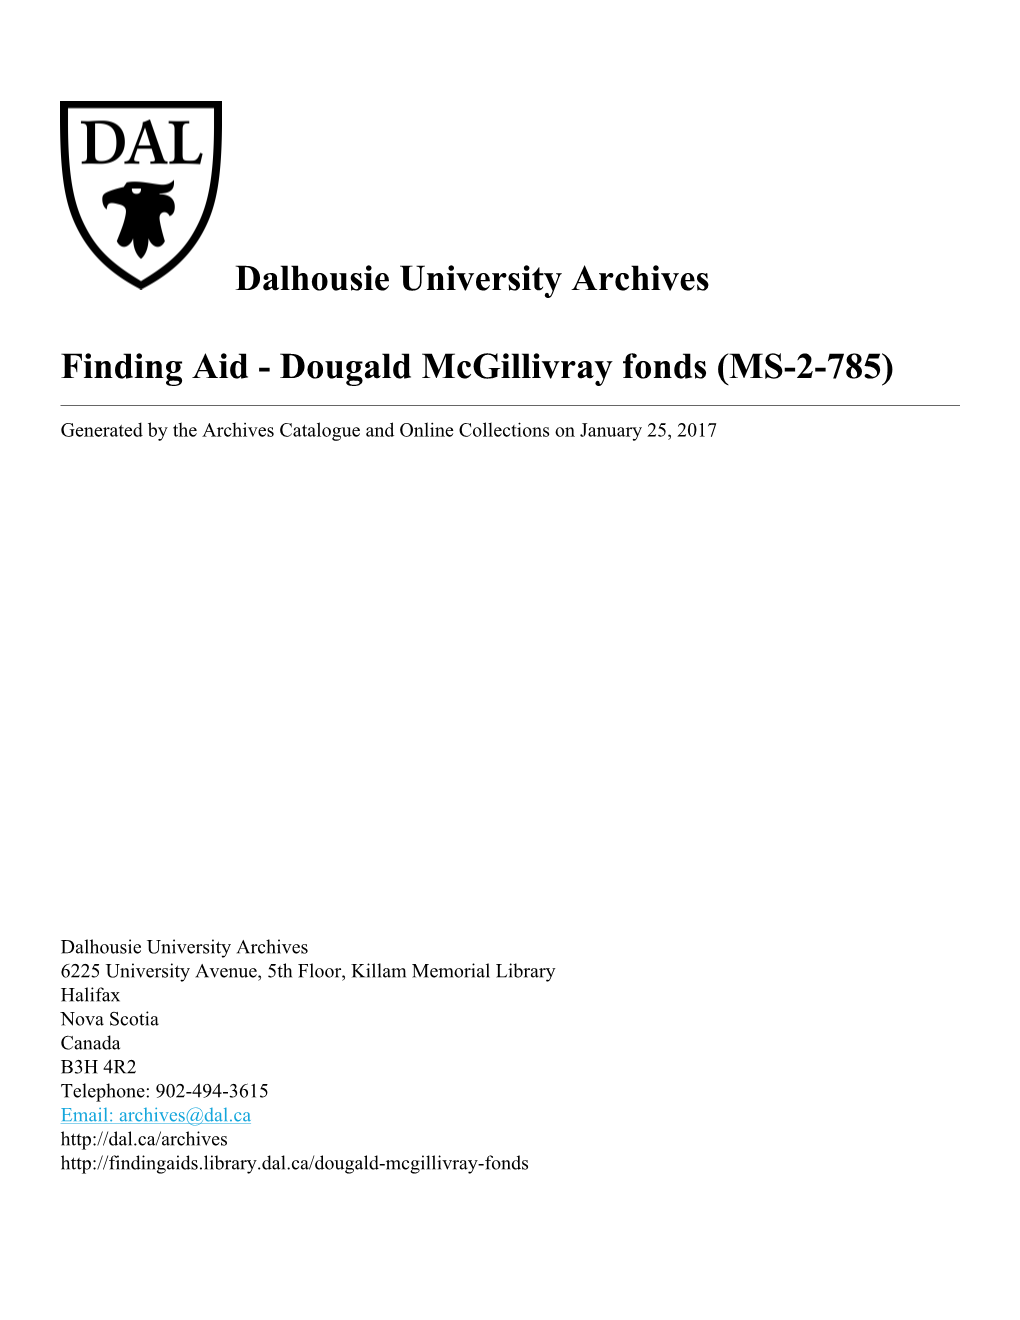 Dougald Mcgillivray Fonds (MS-2-785)